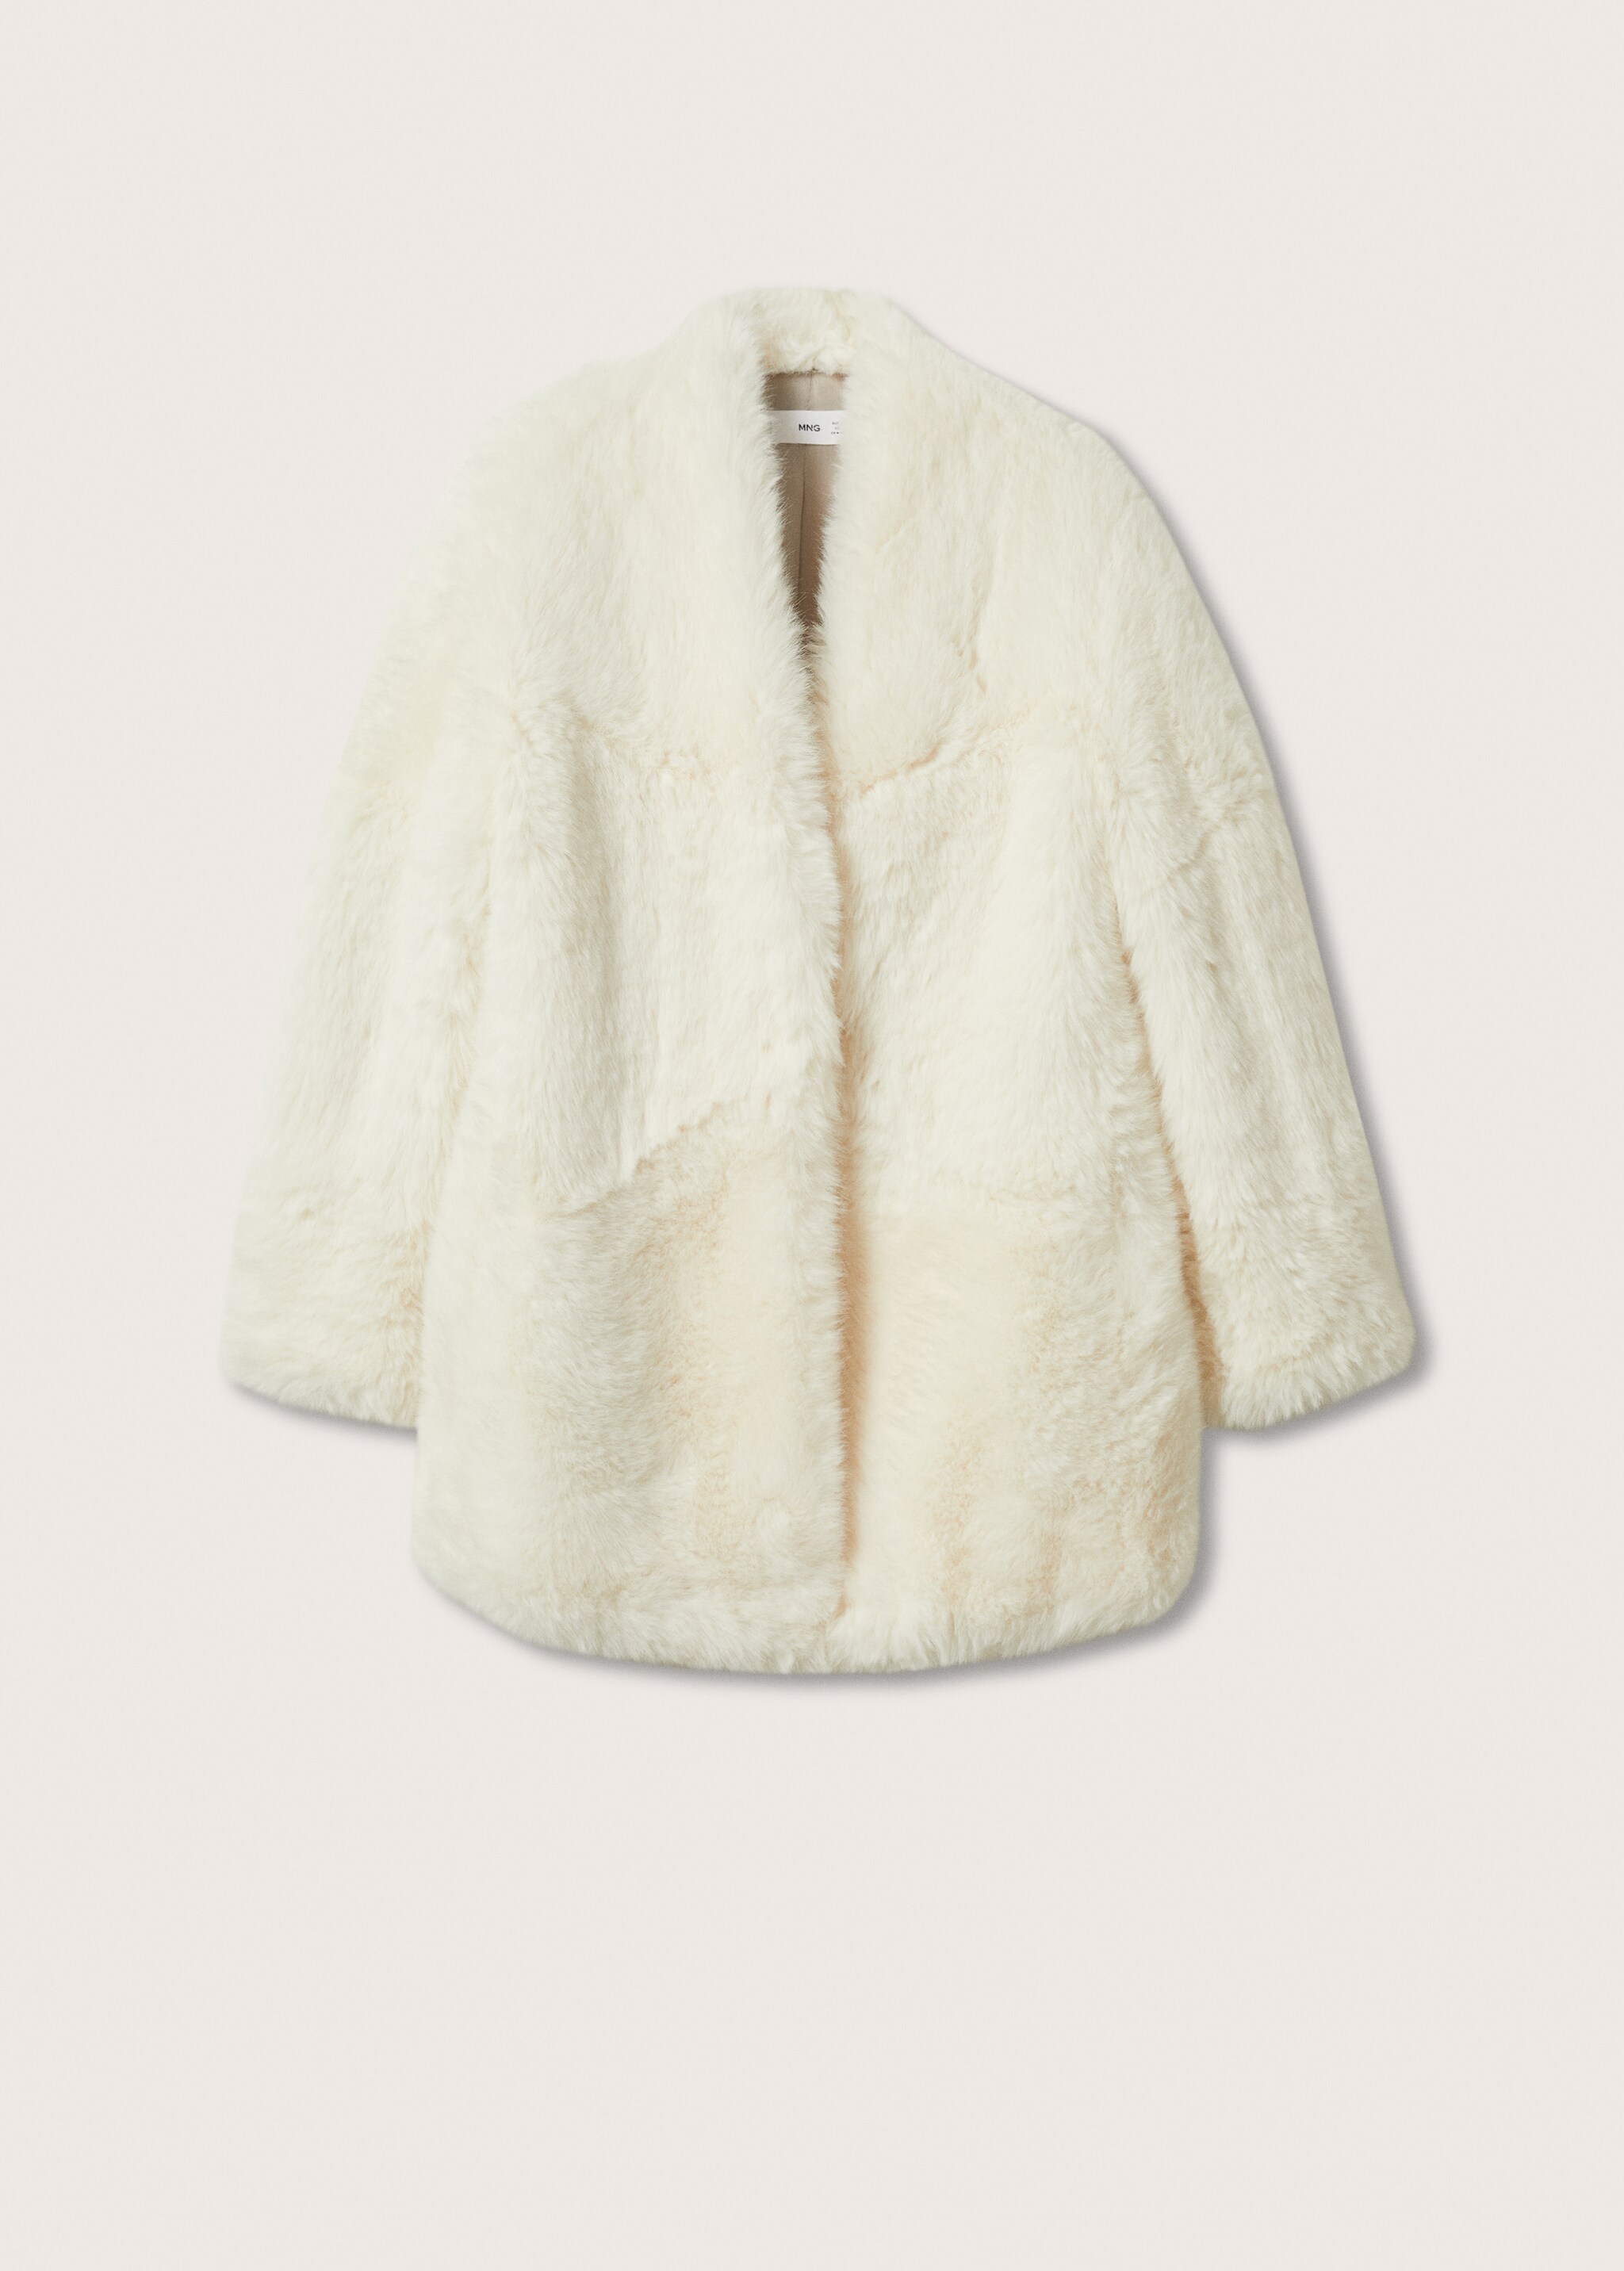 Oversize faux-fur coat - Article without model